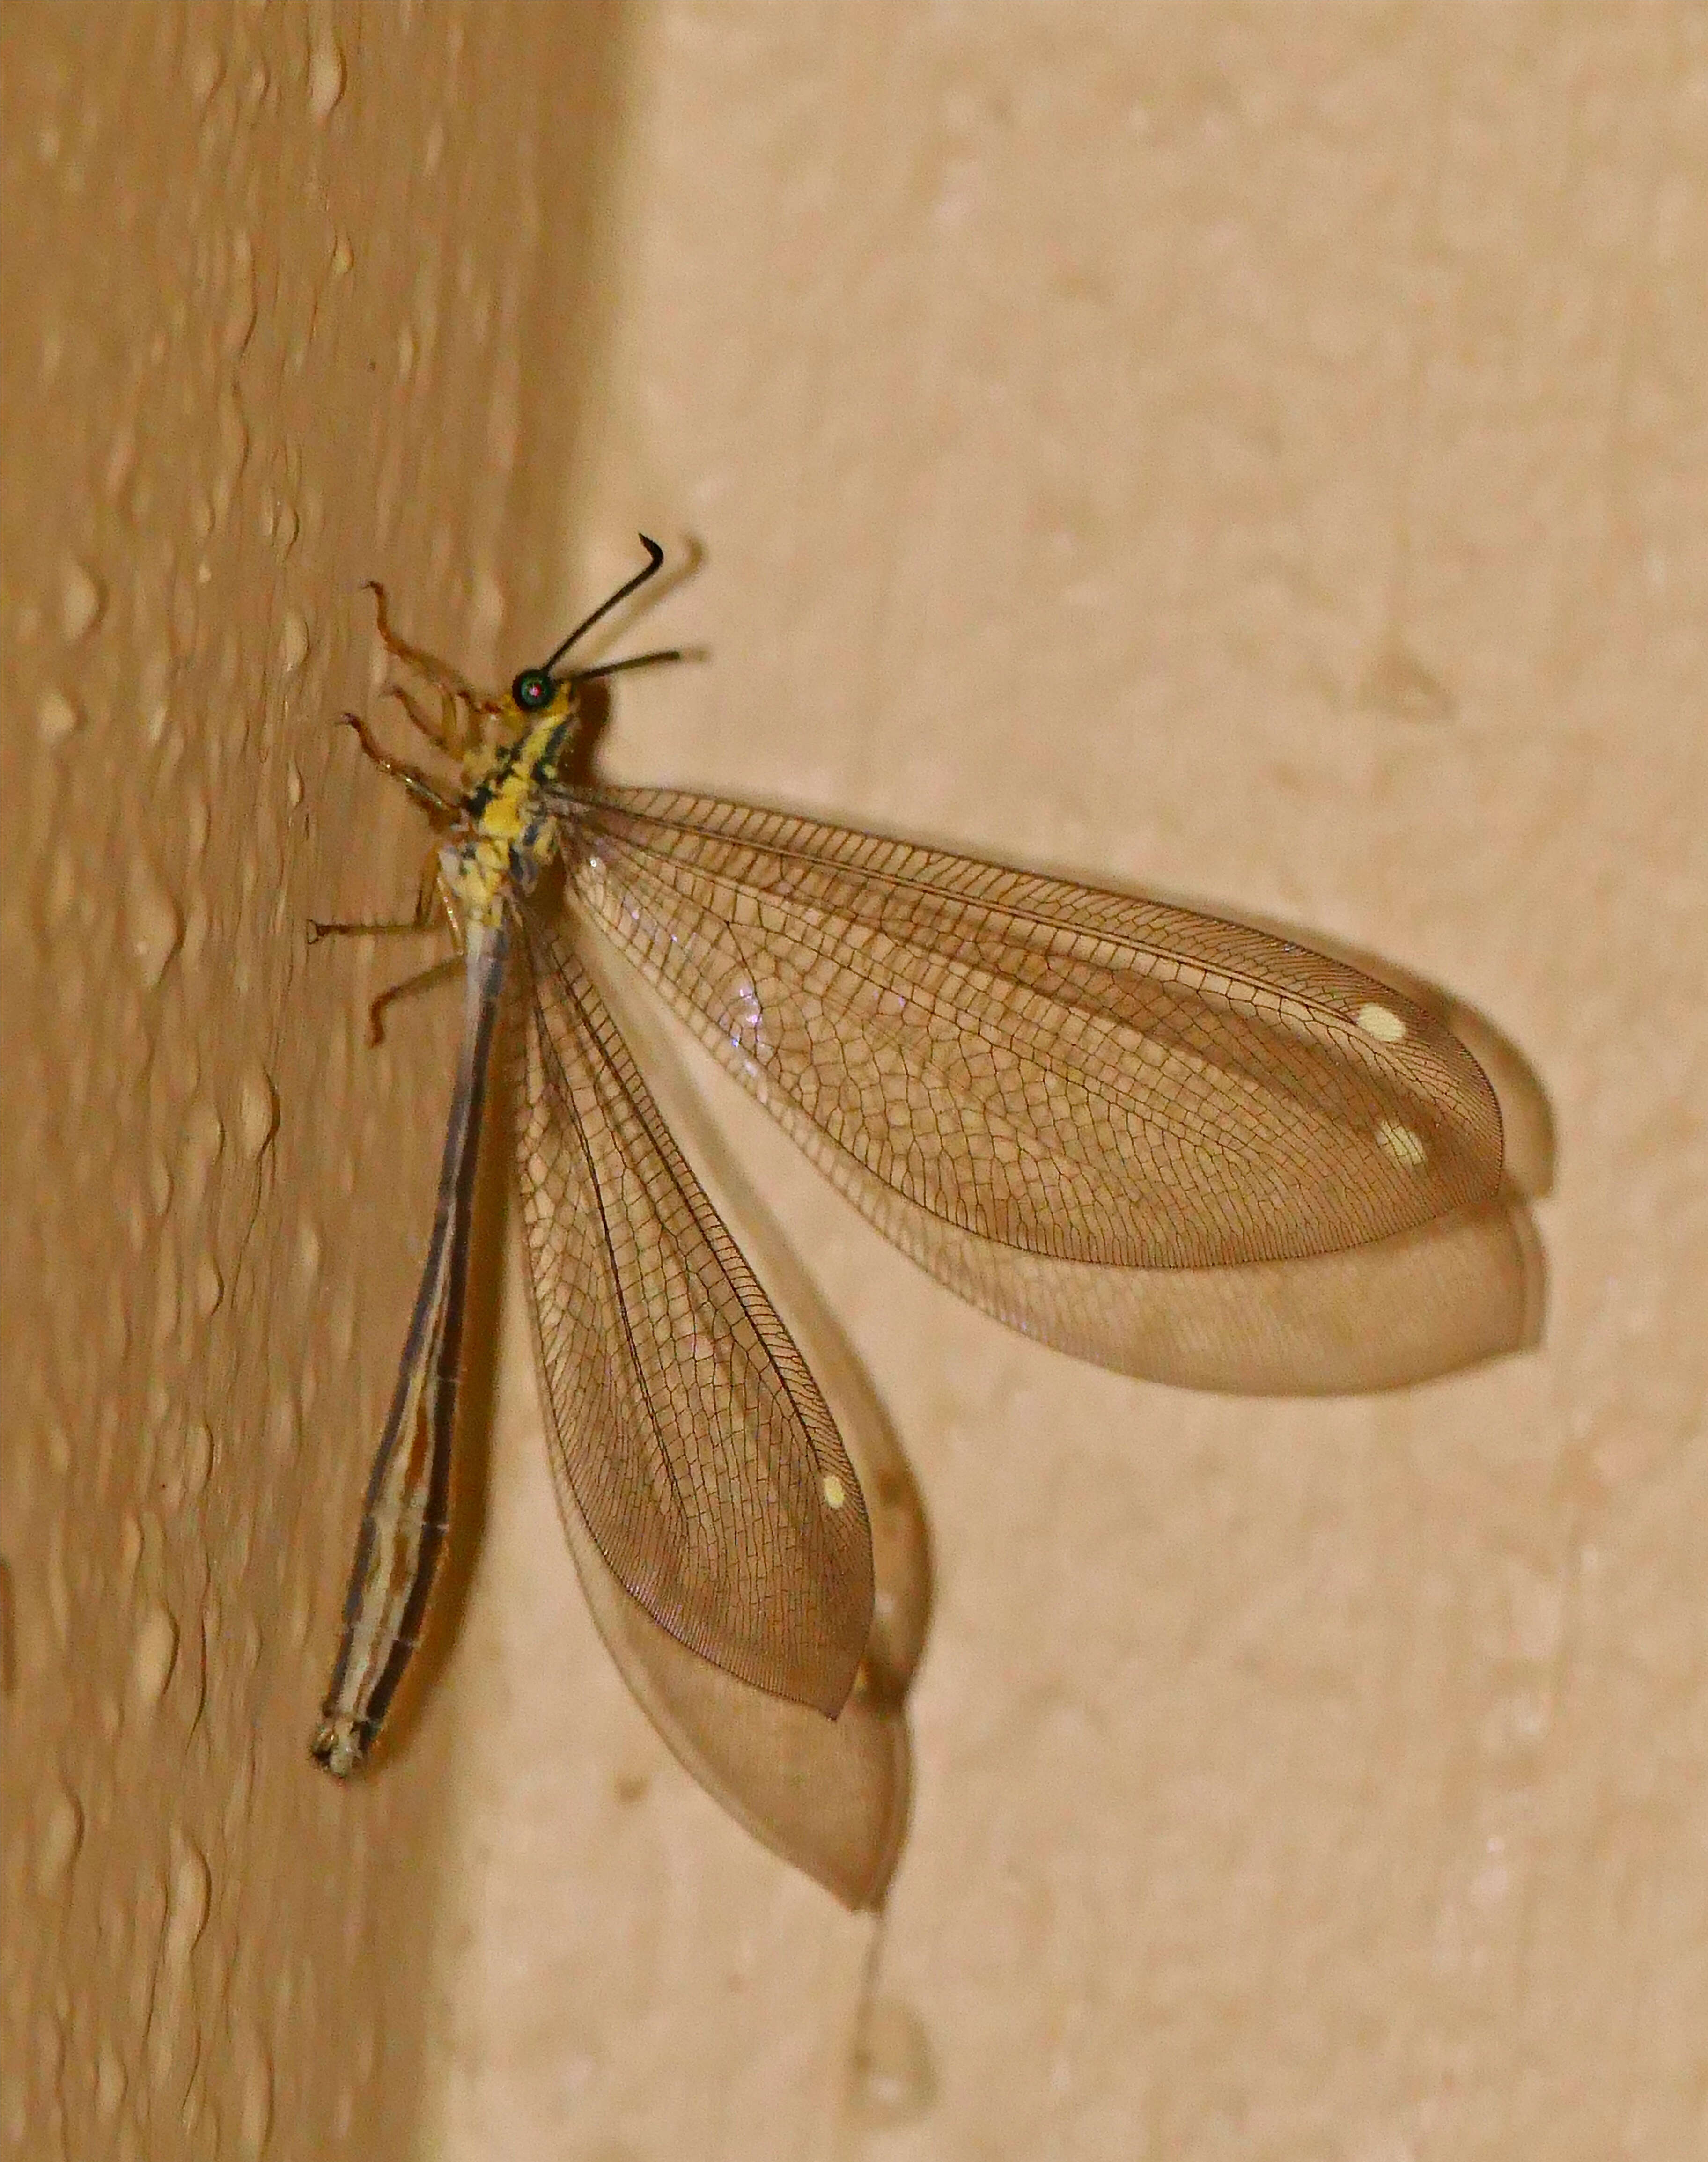 Image of Hagenomyia